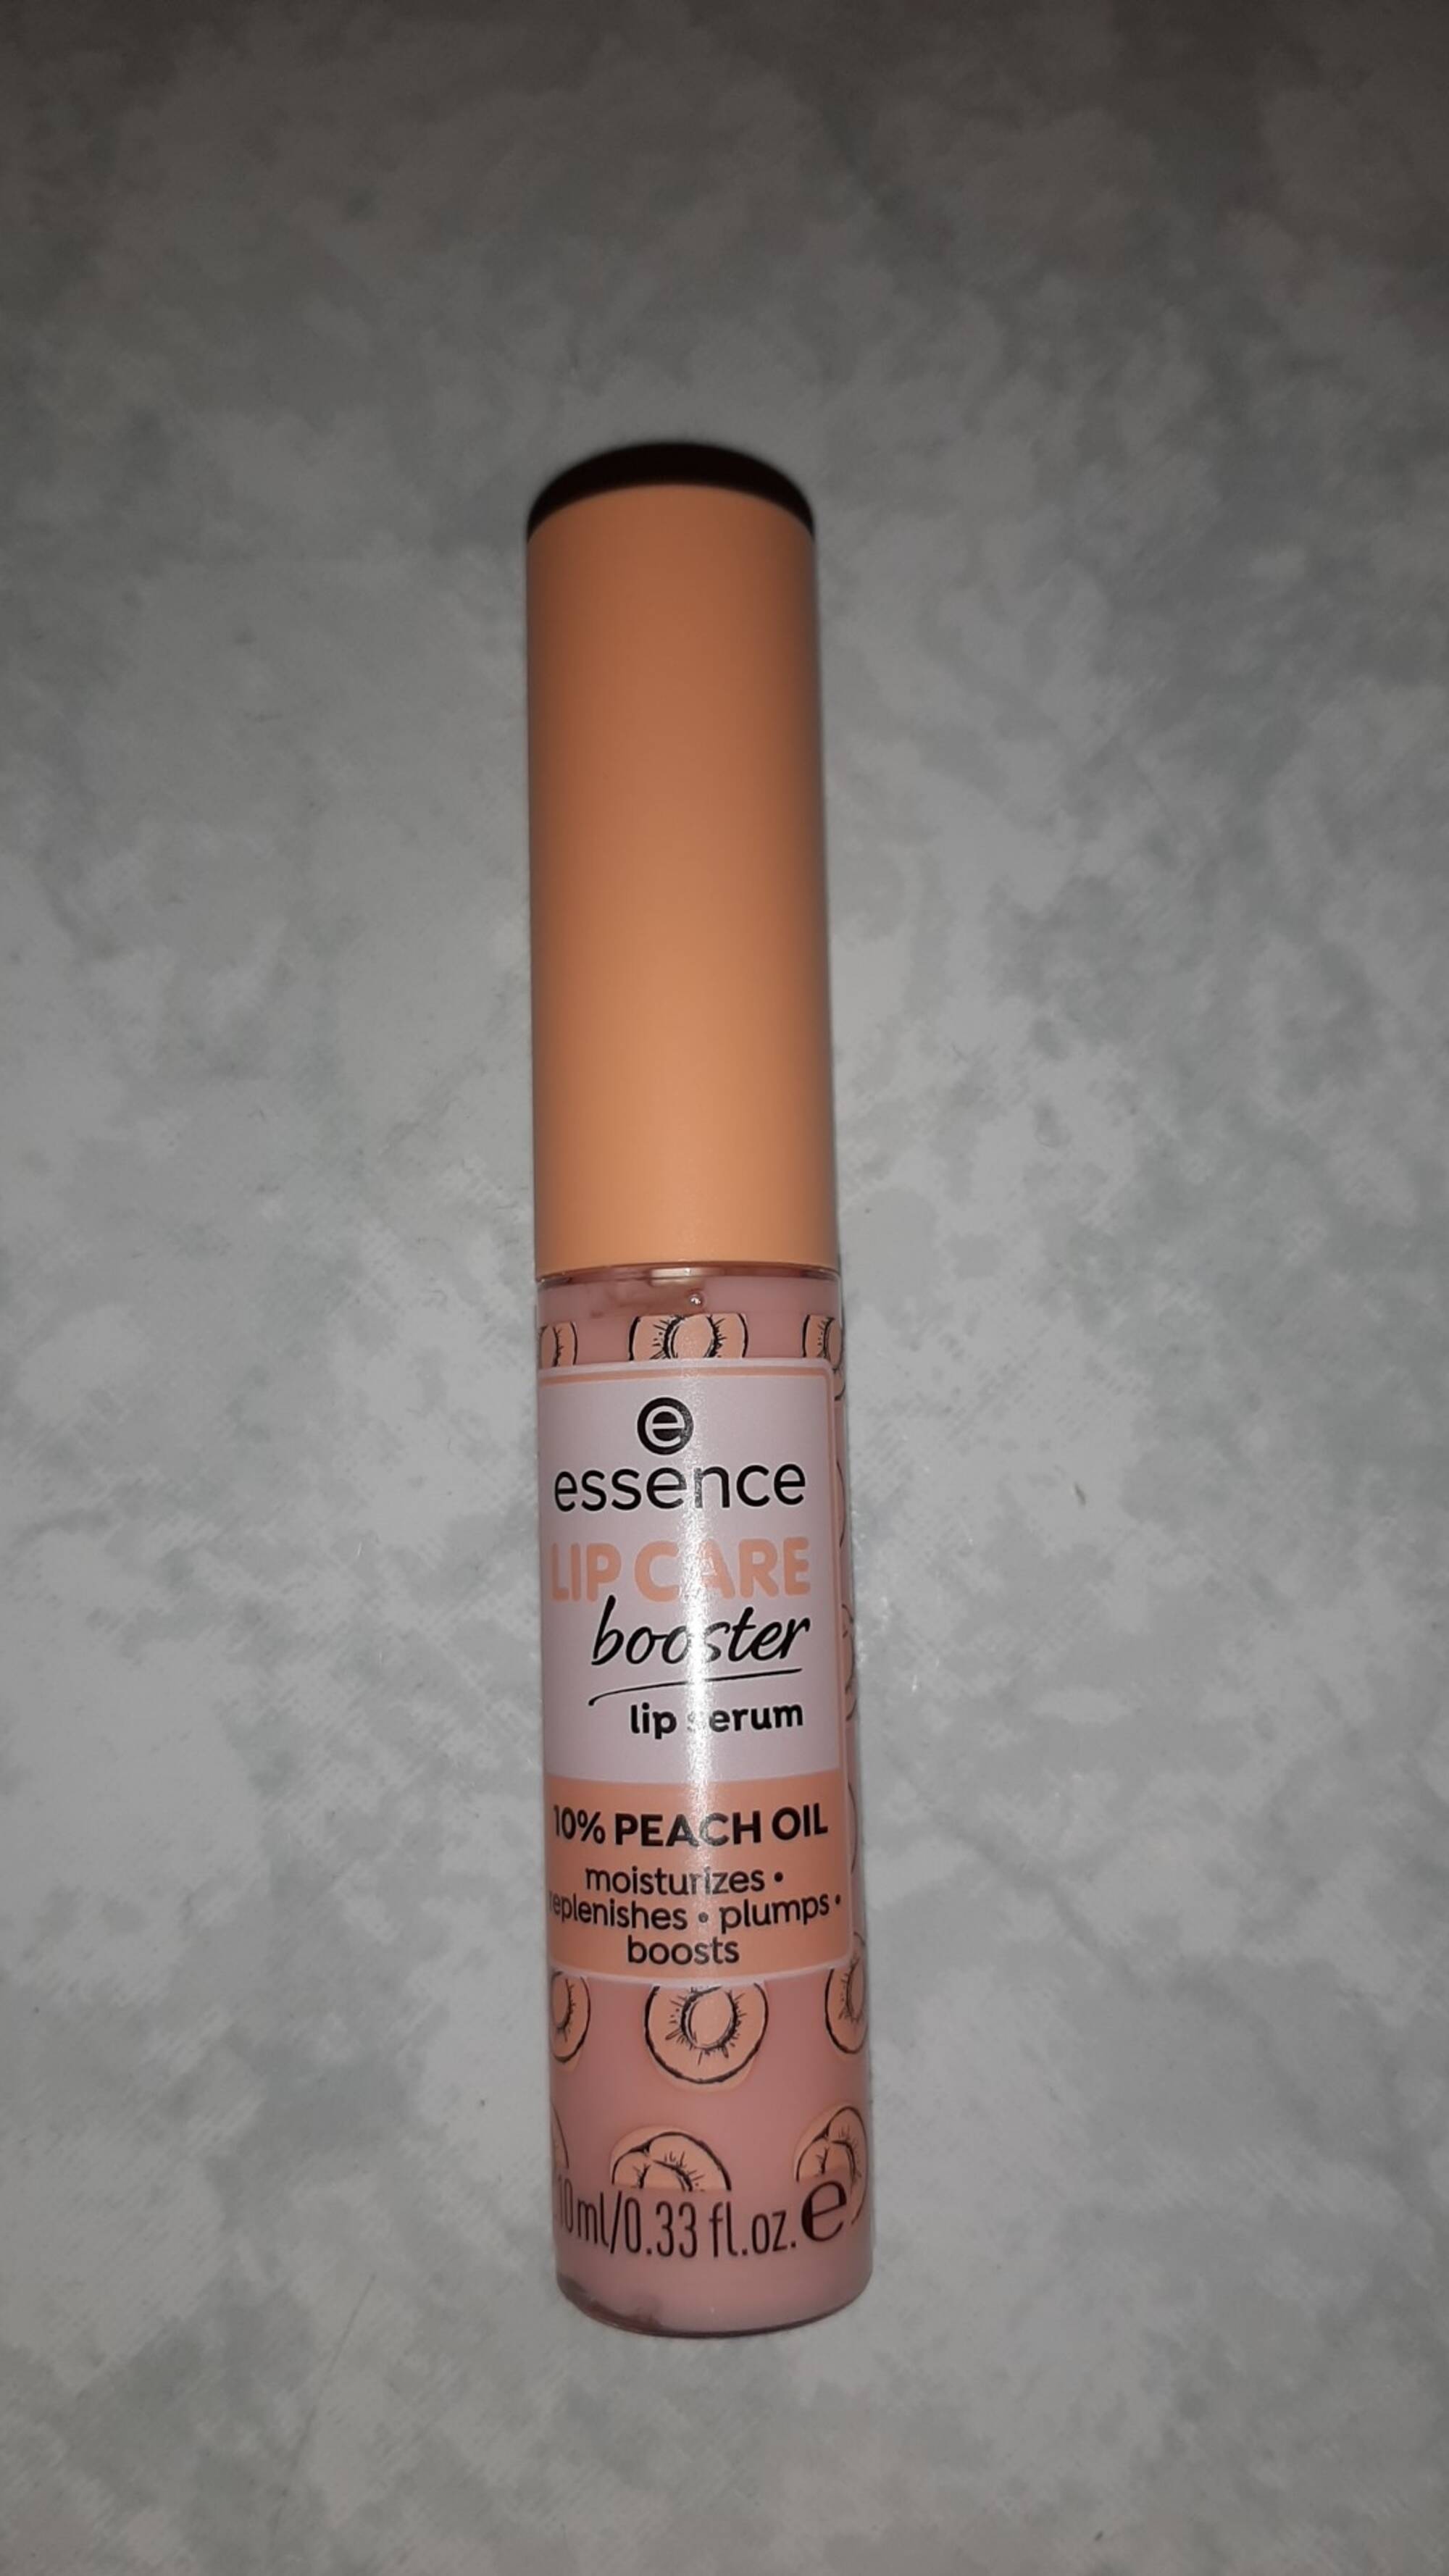 ESSENCE - Lip care booster 10% peach oil